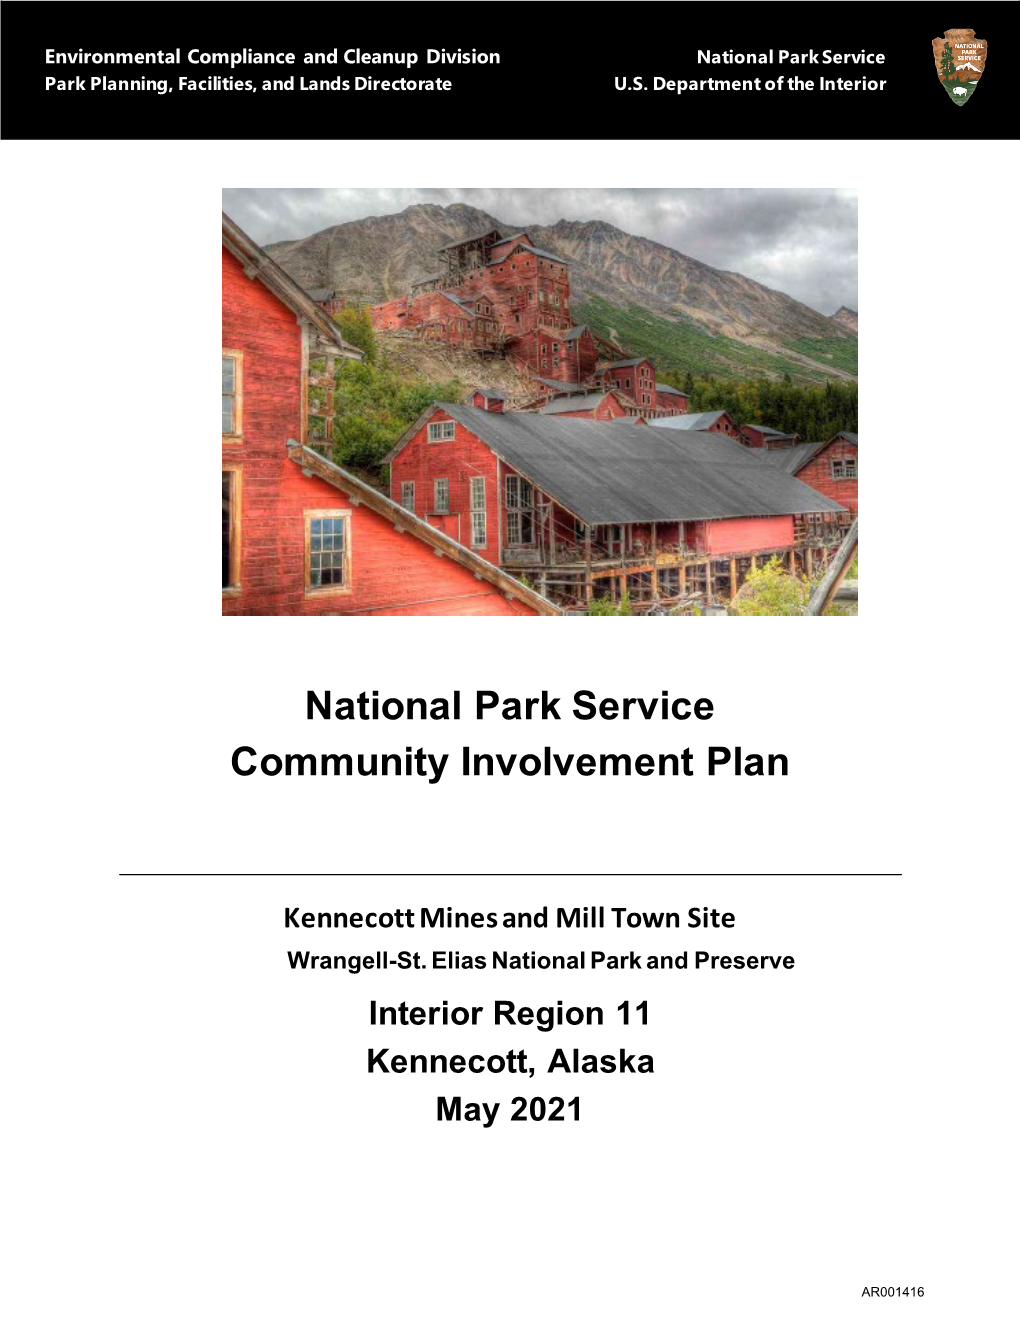 National Park Service Community Involvement Plan